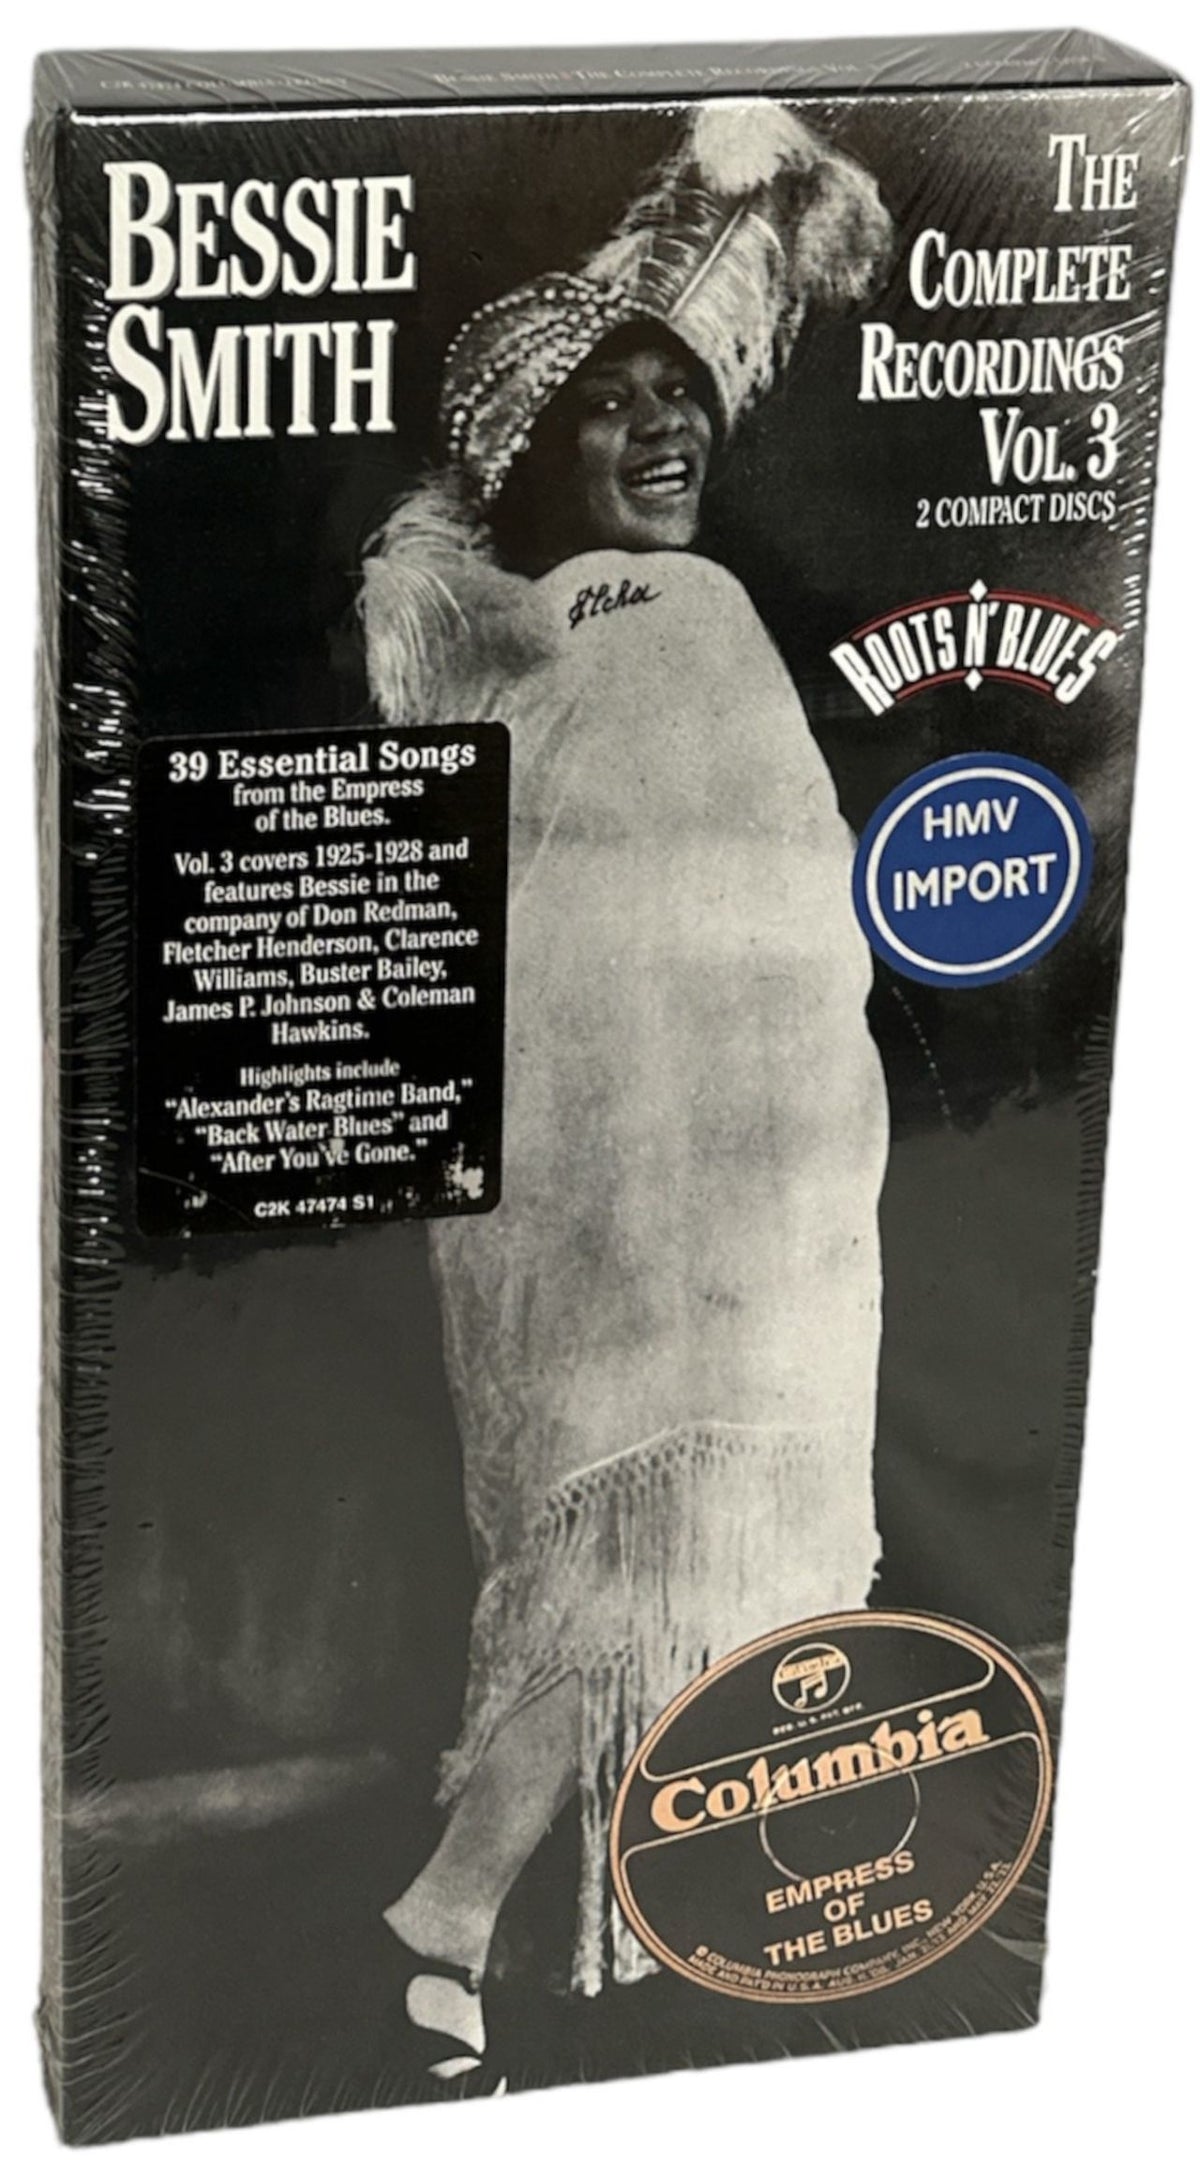 Bessie Smith The Complete Recordings Vol. 3 - Sealed US Cd album box s —  RareVinyl.com